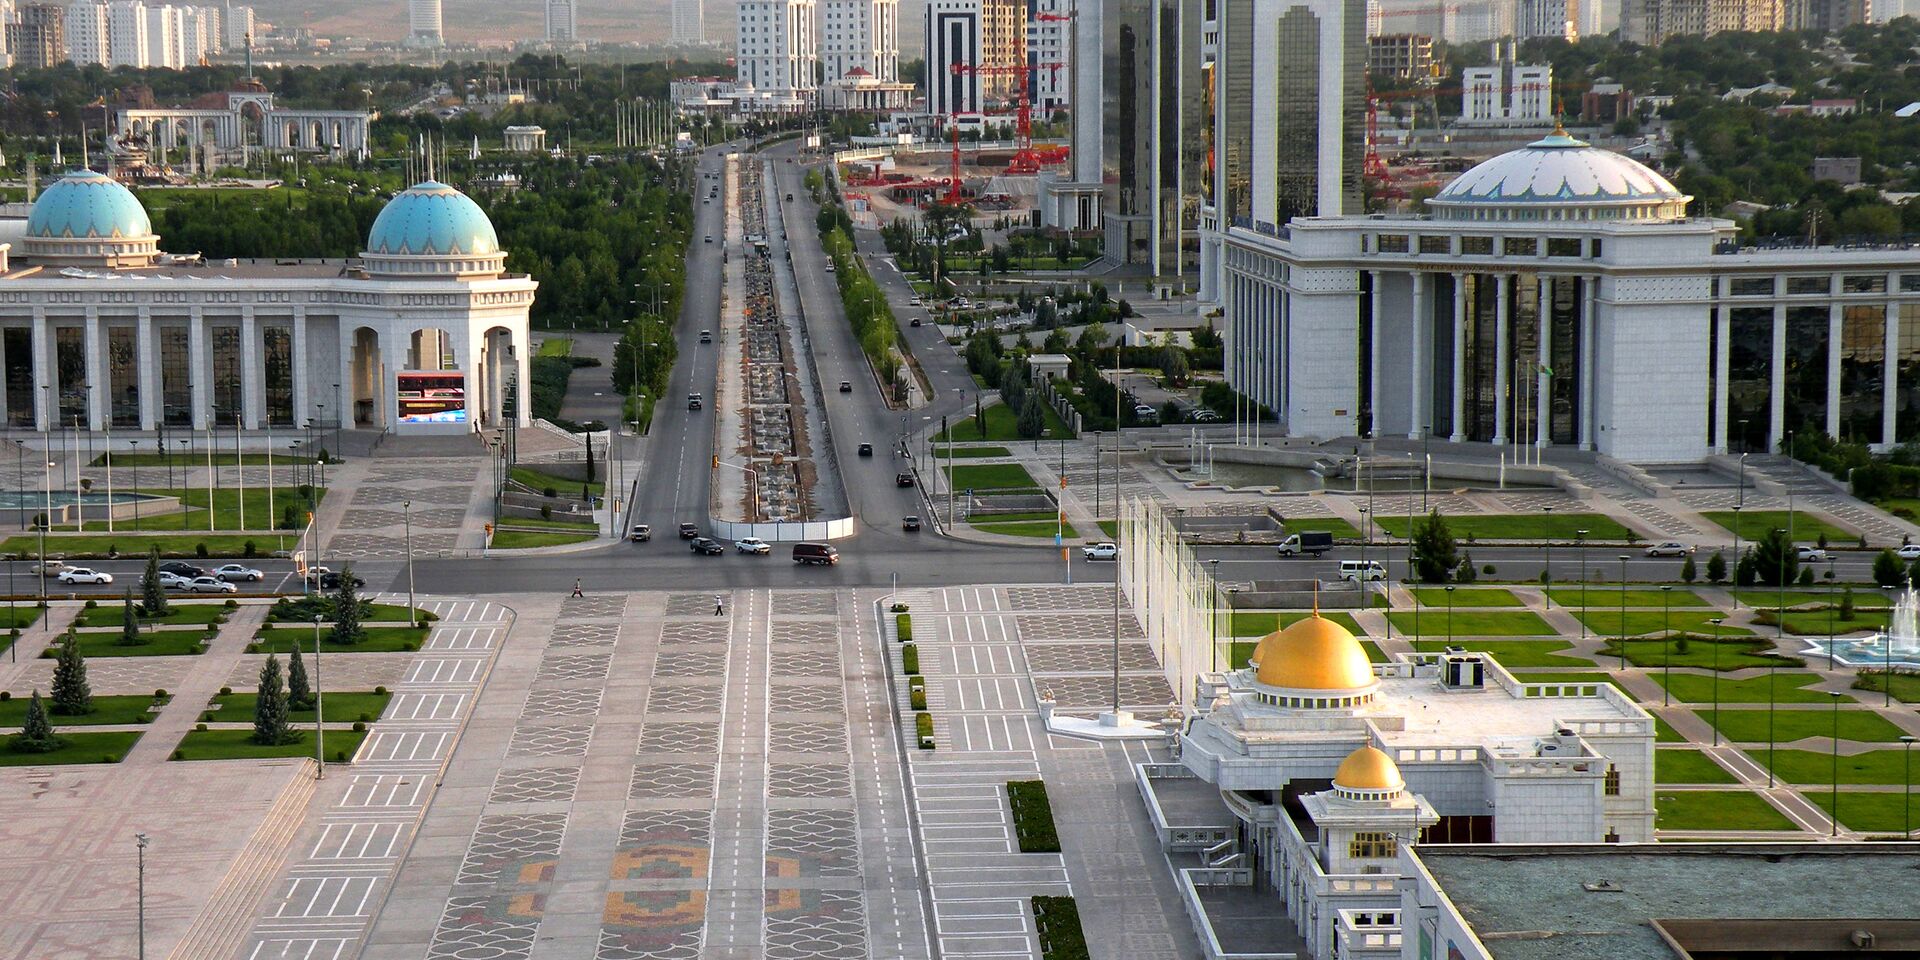 Ашхабад – столица Туркменистана - ИноСМИ, 1920, 09.07.2022